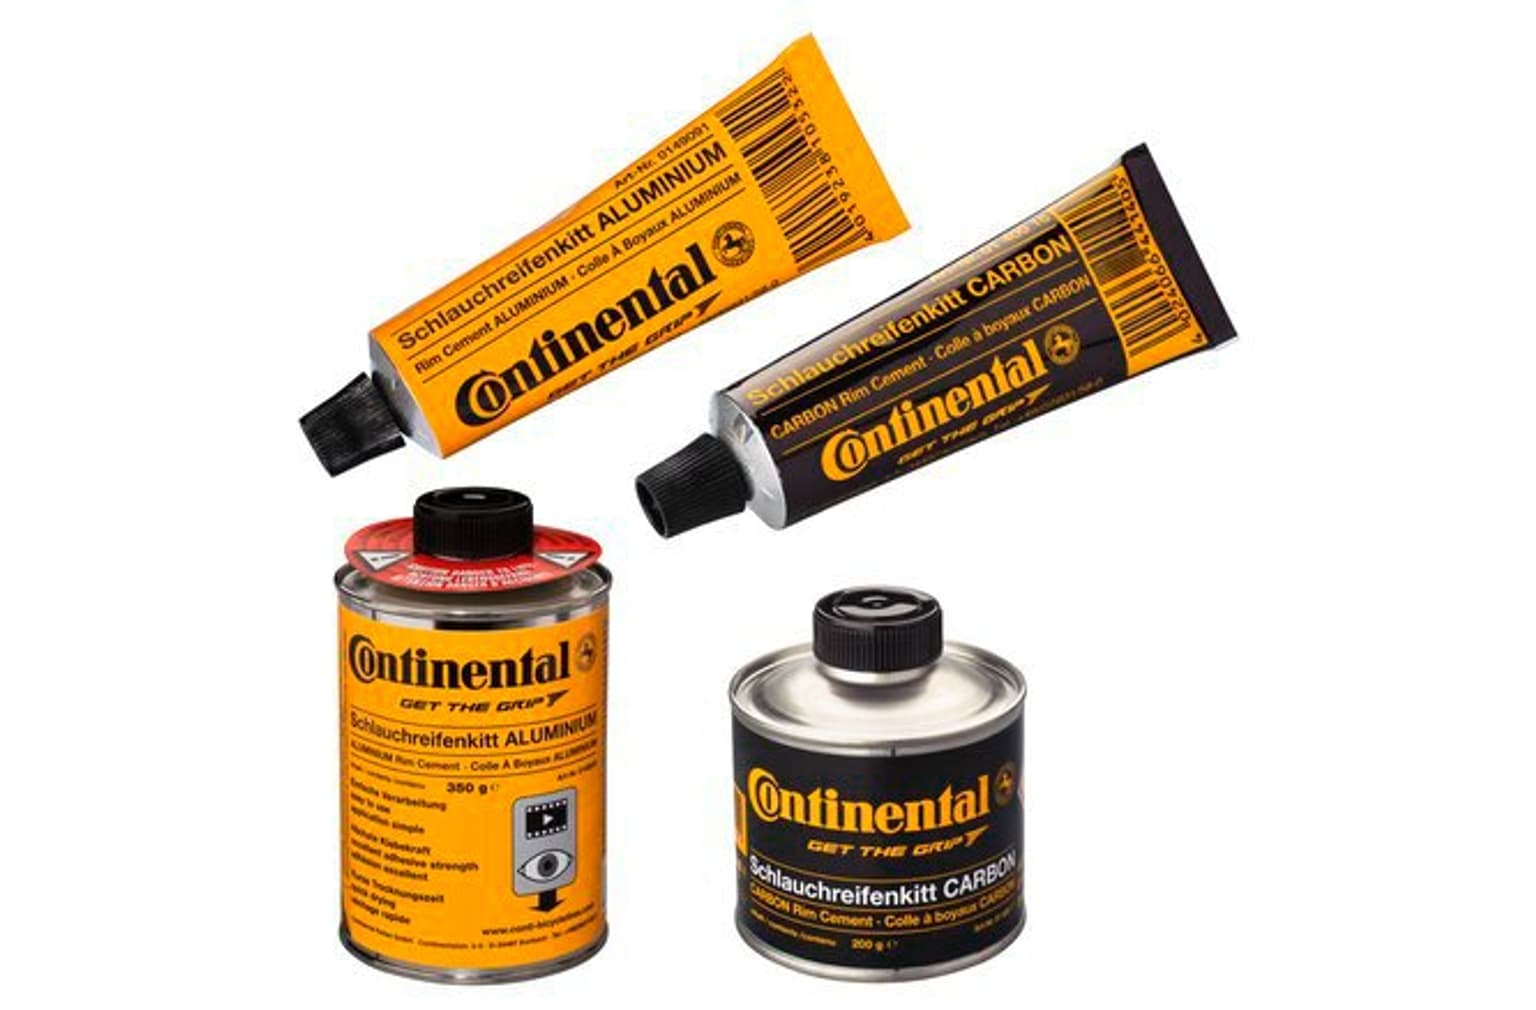 Continental Continental Collékitt Produits d'entretien 1